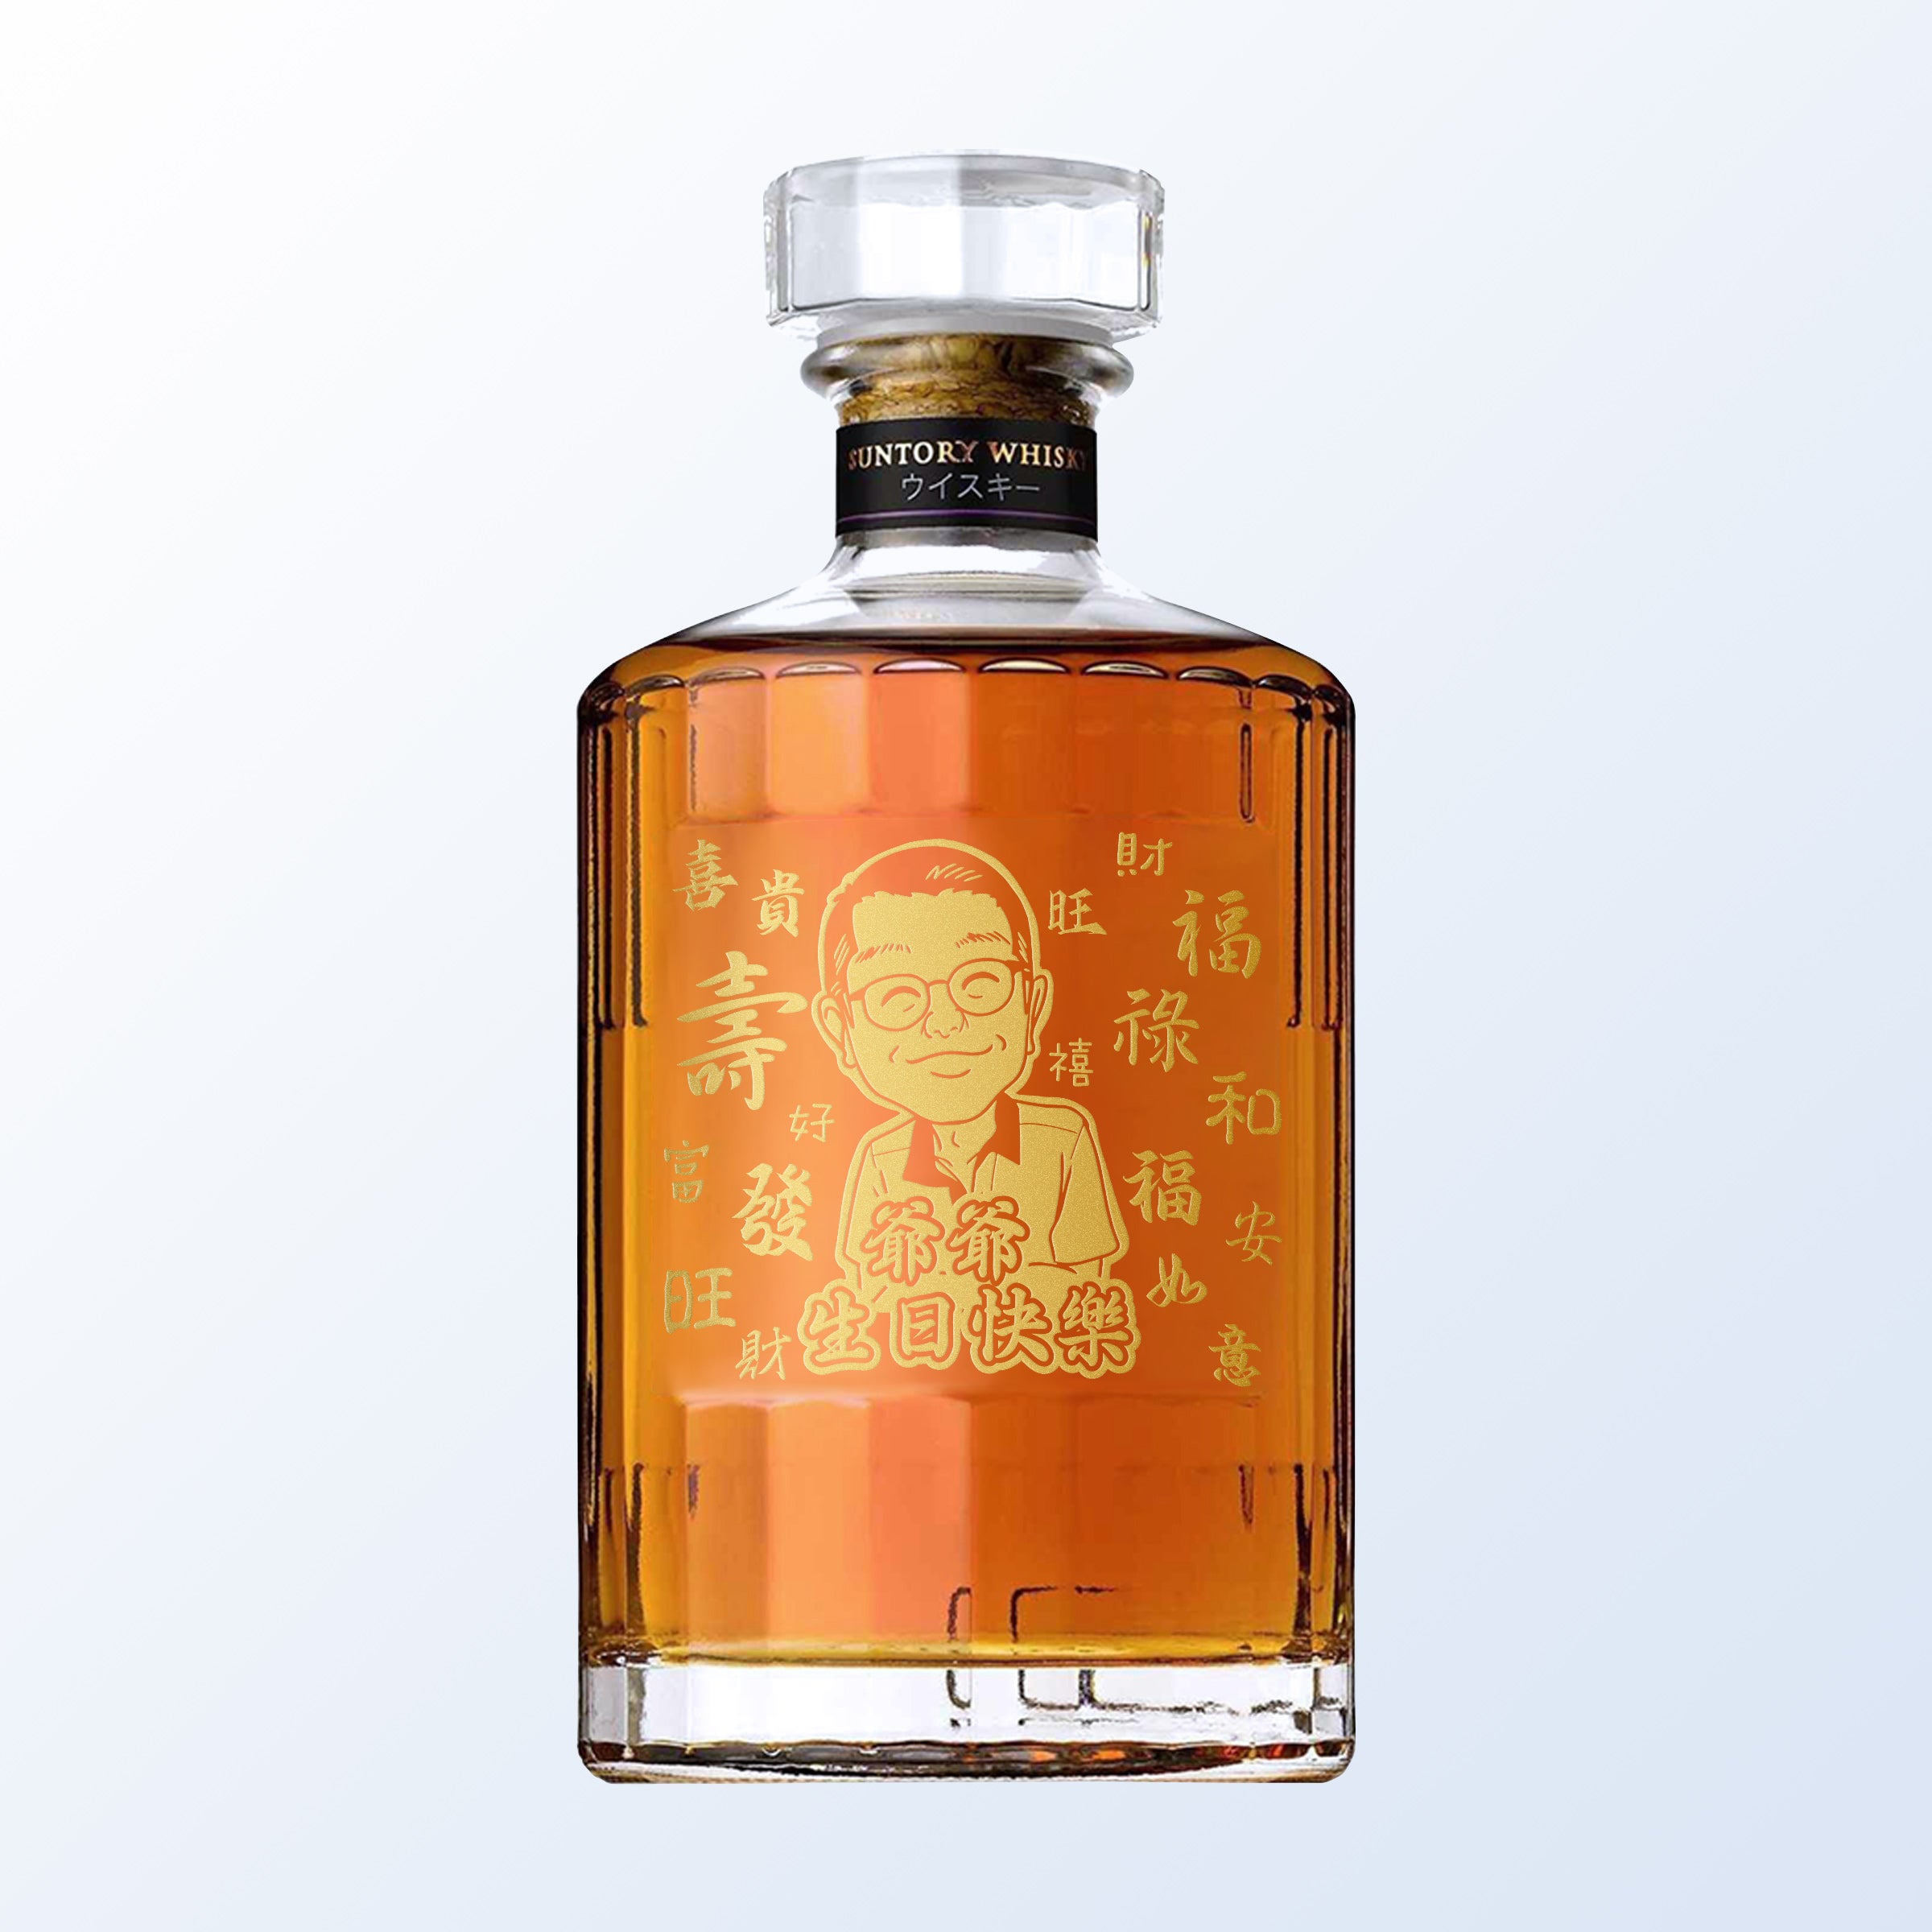 Hibiki Japanese Harmony & Bottega Whisky Glasses Gift Set with Engraving |birthday gift - Design Your Own Wine